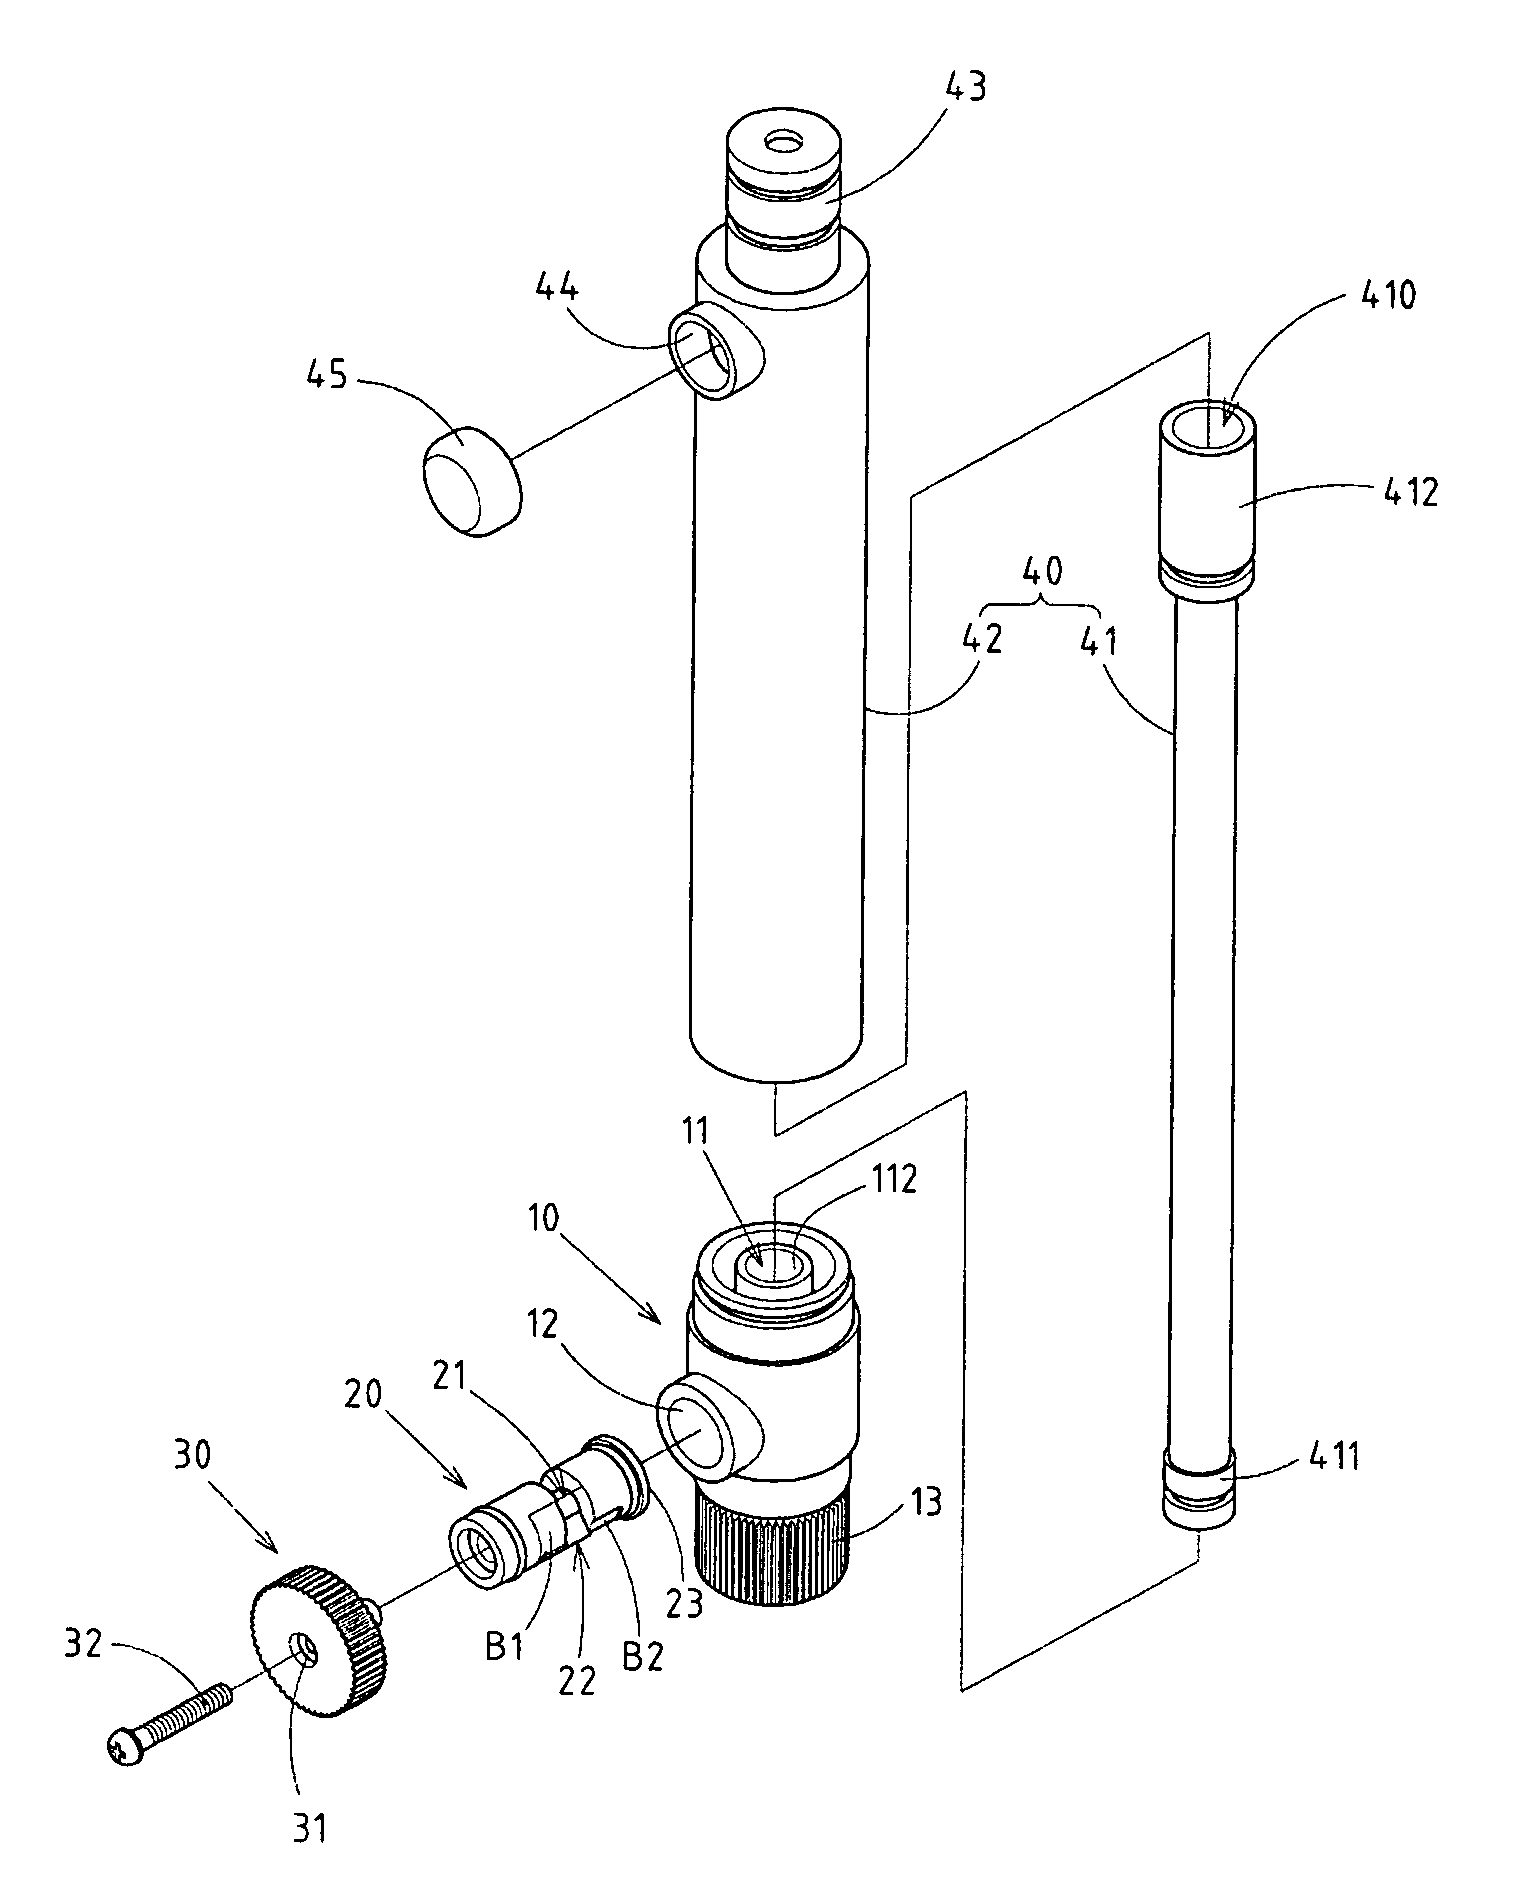 Sprinkler provided with a built-in mechanism for dispensing detergent